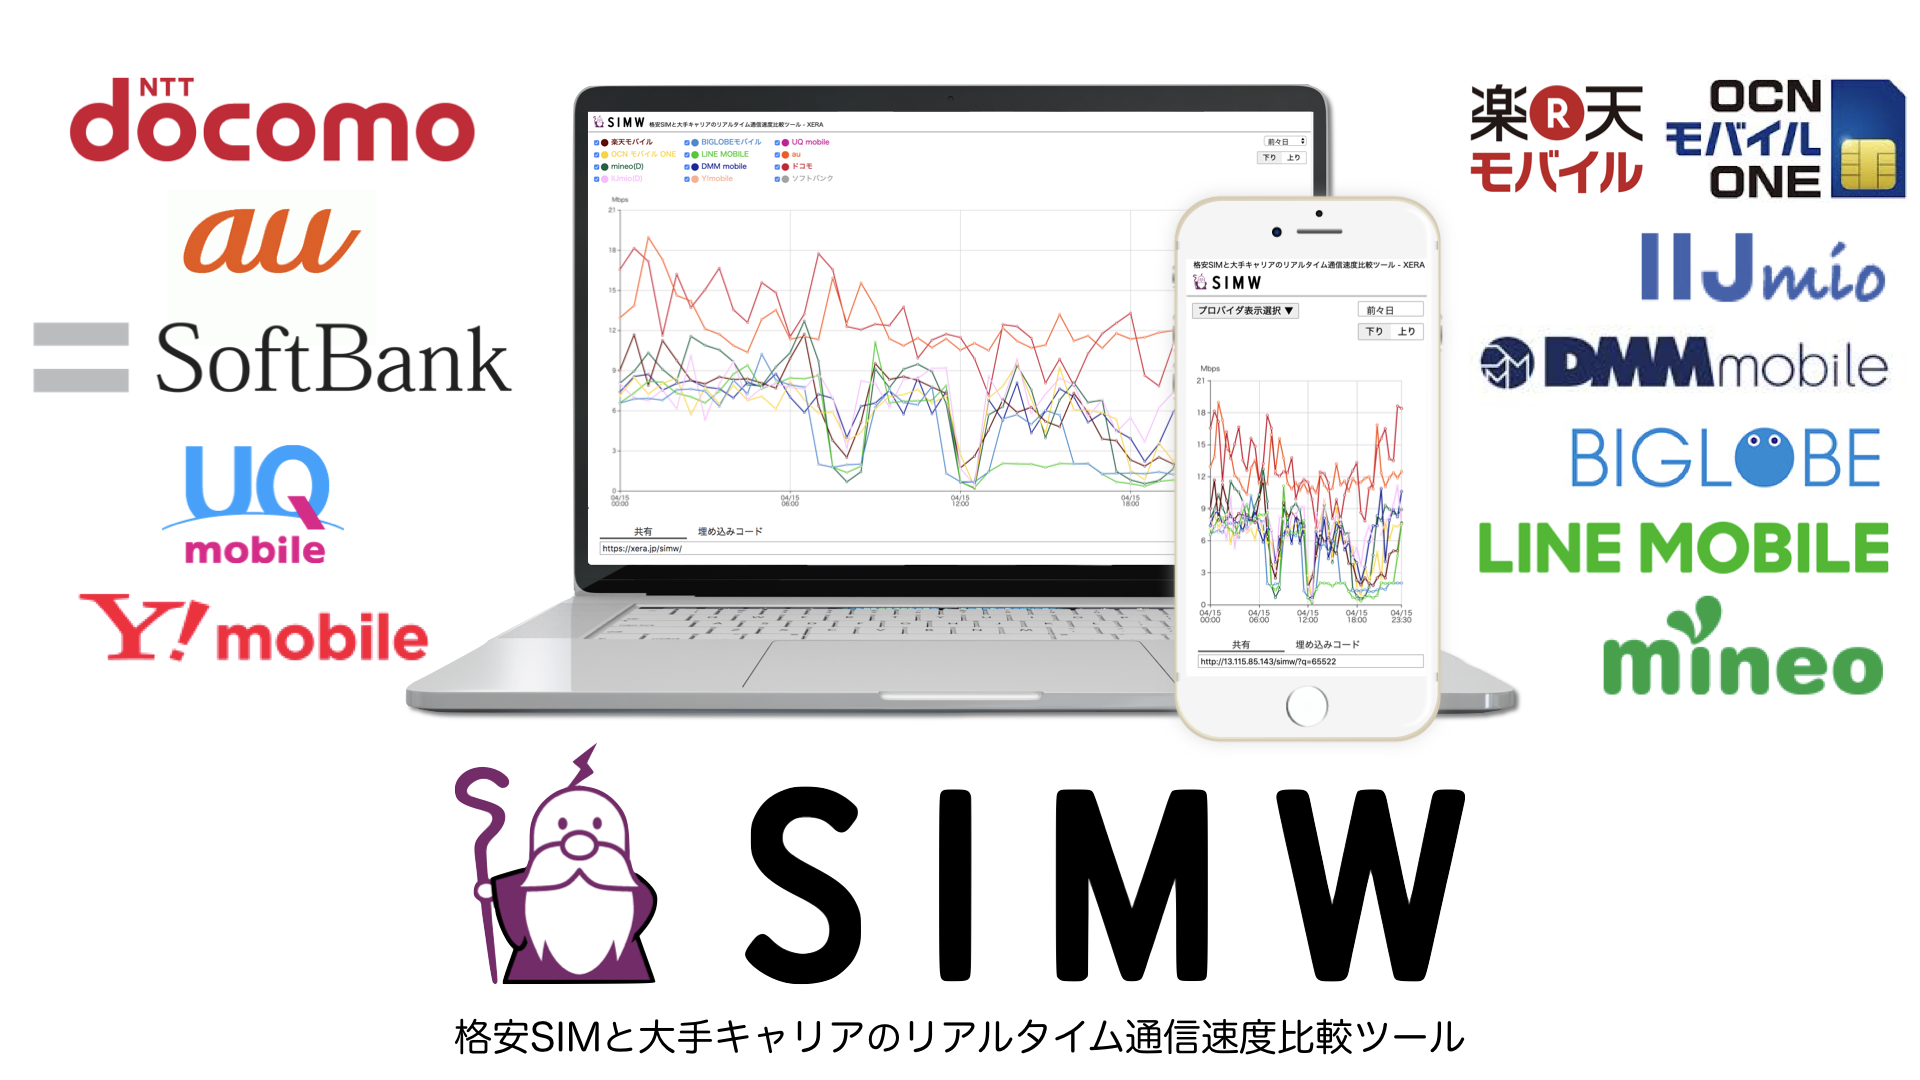 Simwが3大キャリア サブブランド計5社の通信速度を計測開始 株式会社xeraのプレスリリース